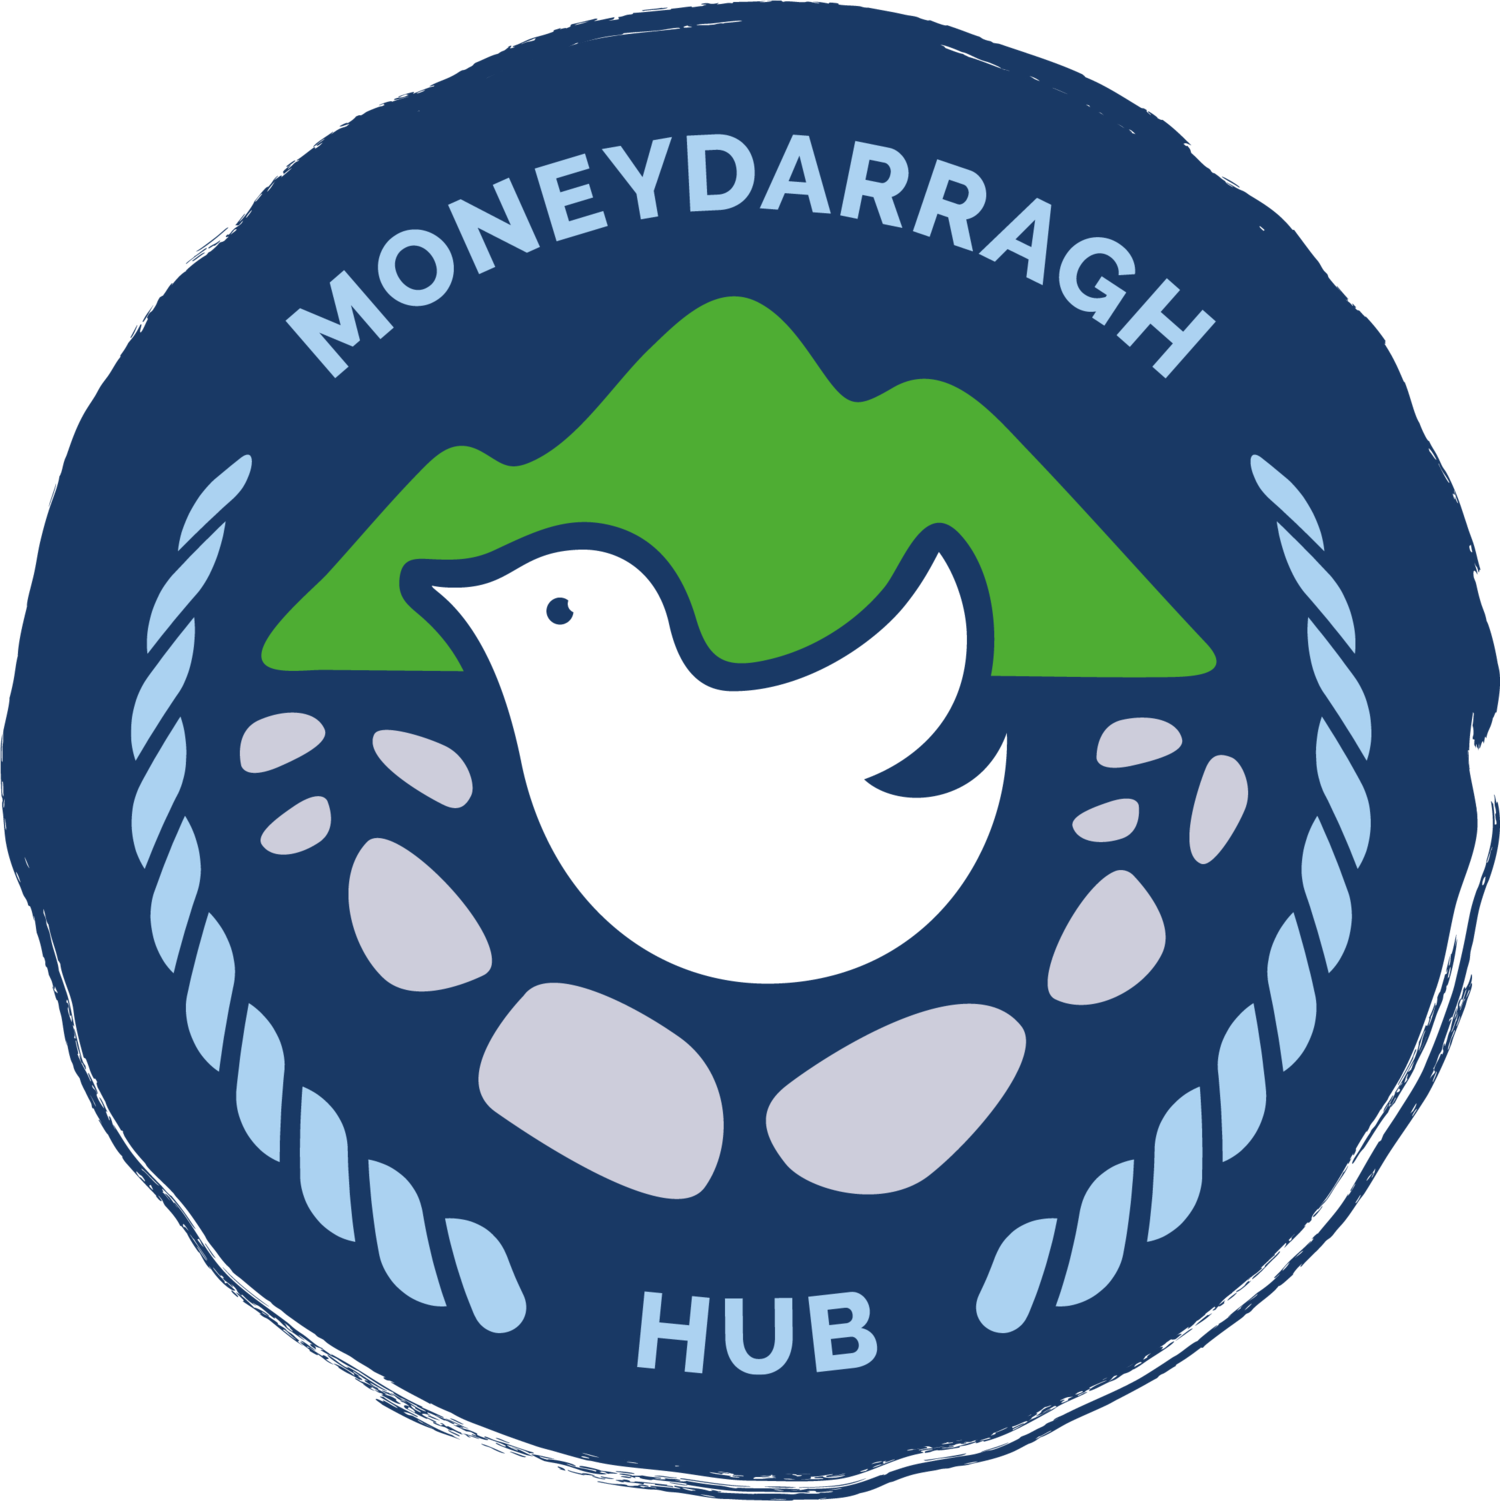 Moneydarragh Hub